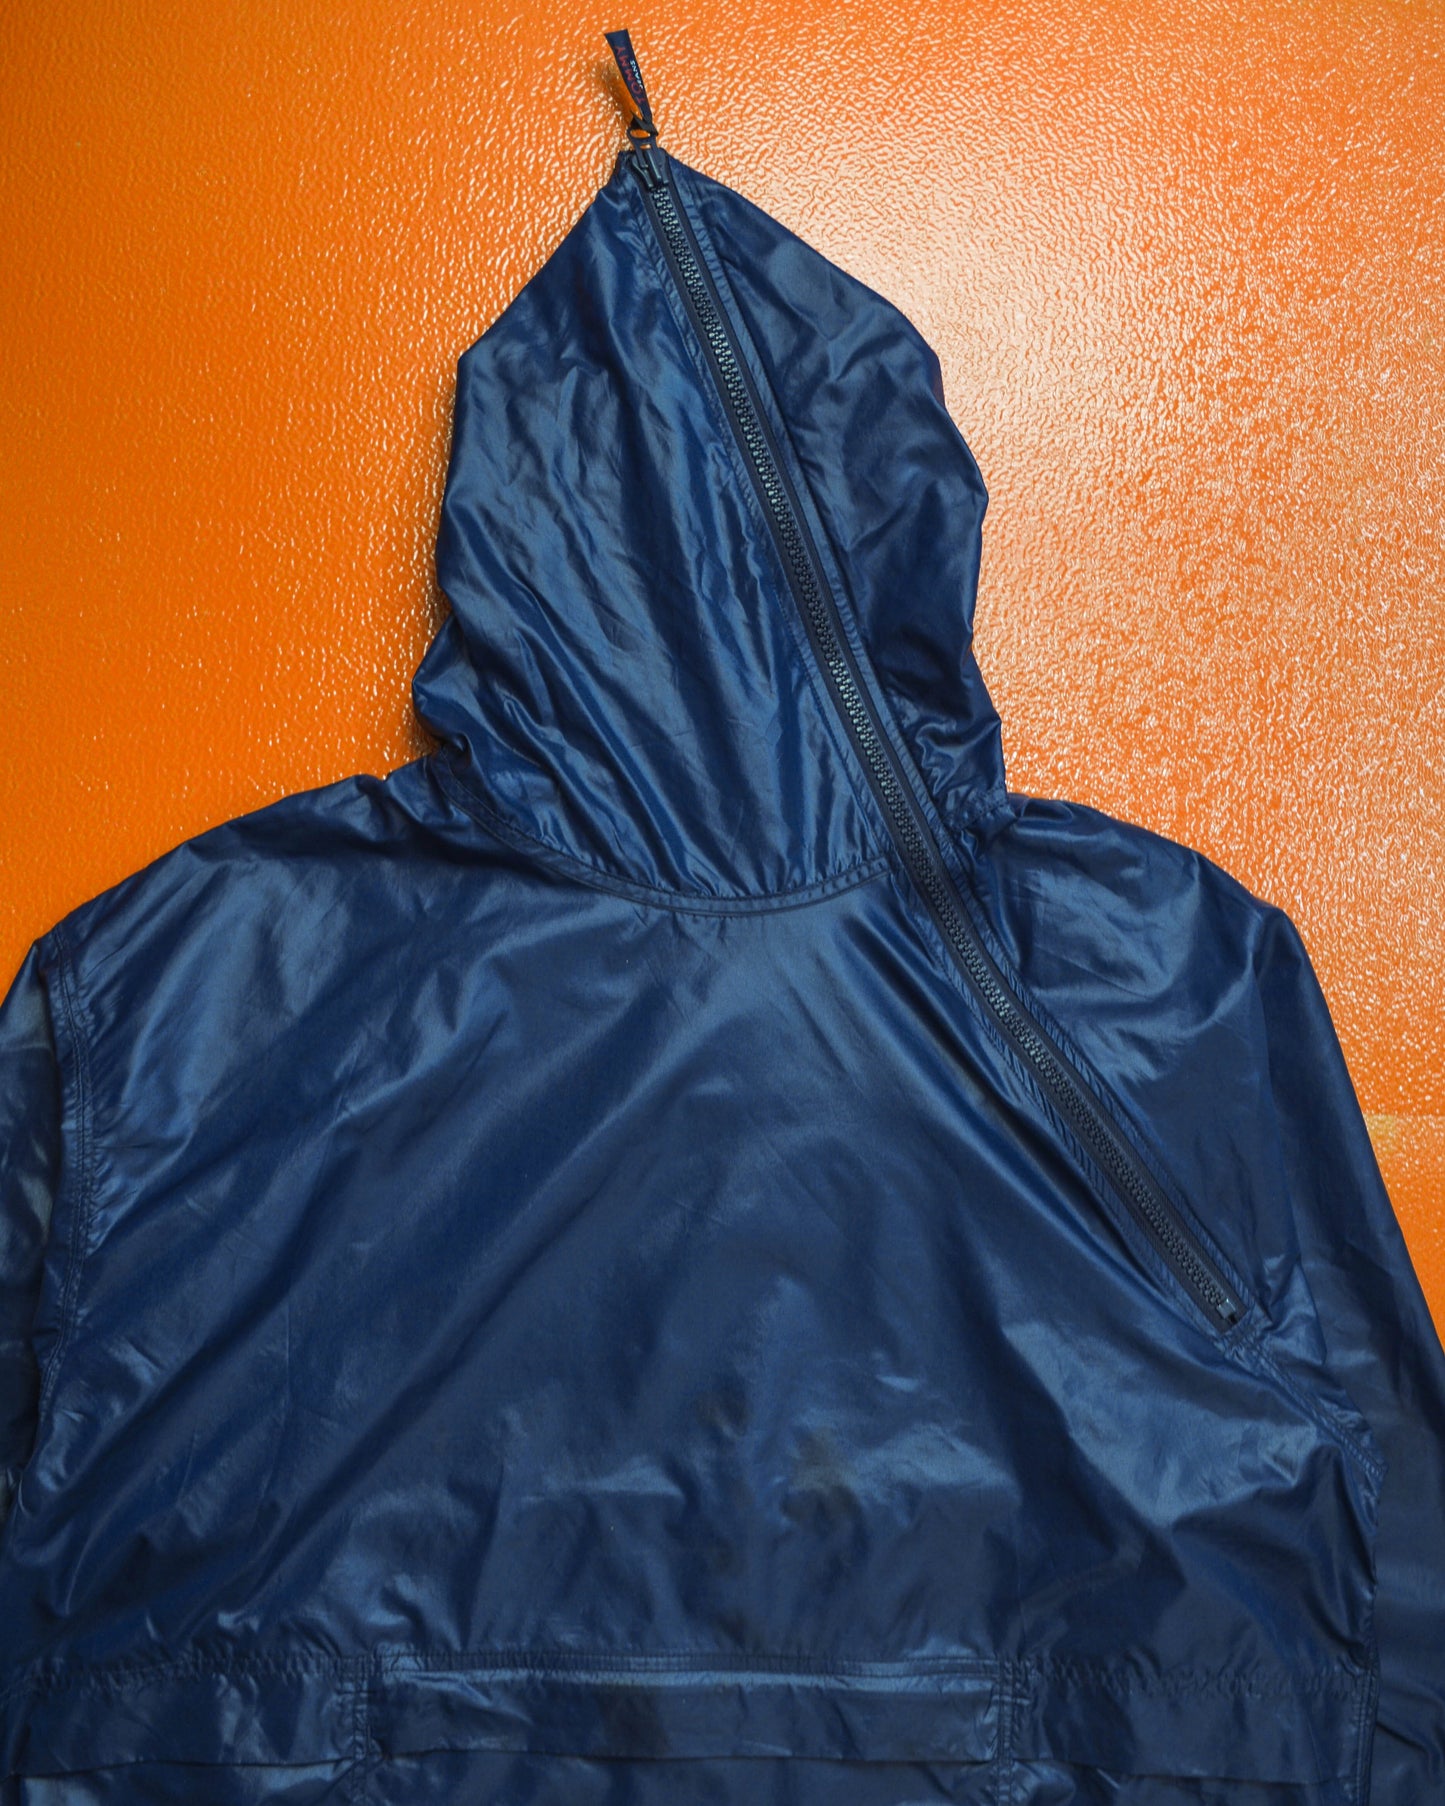 Tommy Hilfiger 2003 Asymmetrical Full Face Zip Survival Style Navy Anorak Jacket (L)